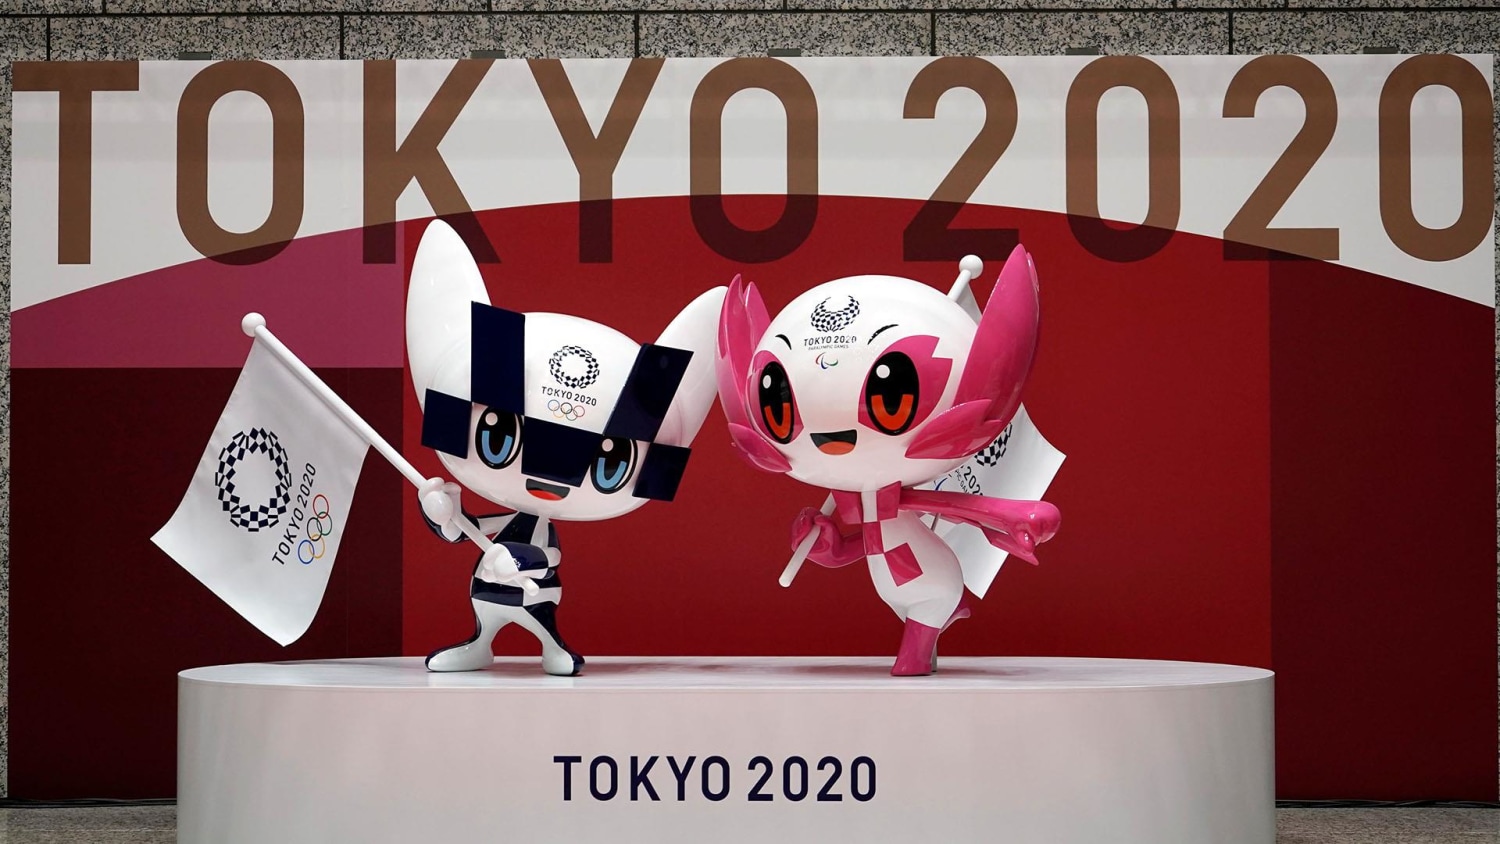 Details about   Tokyo Olympics 2020 Olympic Sketchbook B4 Mascot MIRAITOWA JAPAN